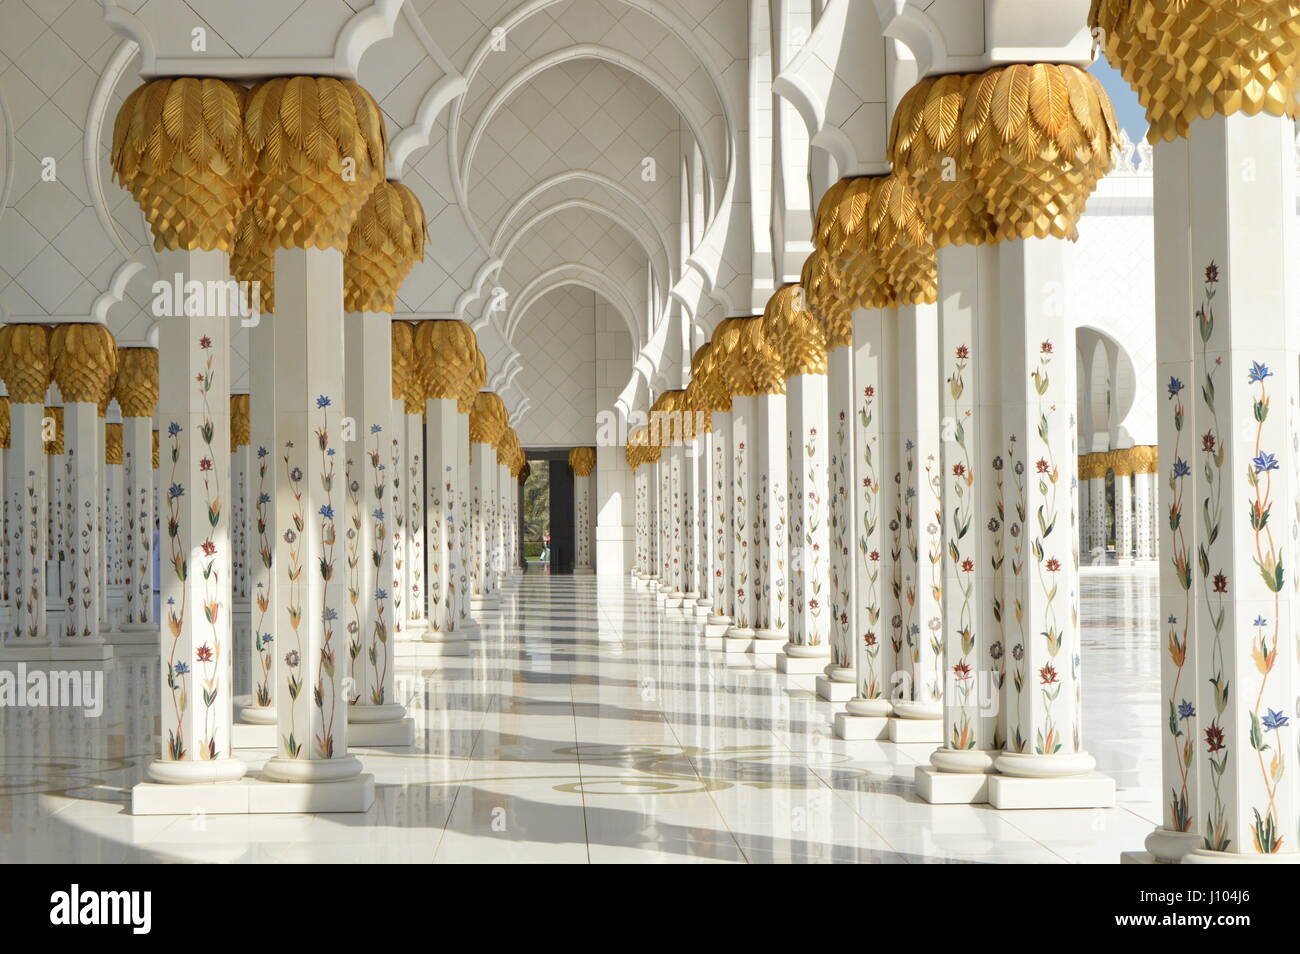 Sheikh Zayed Grand Mosque pillars Stock Photo